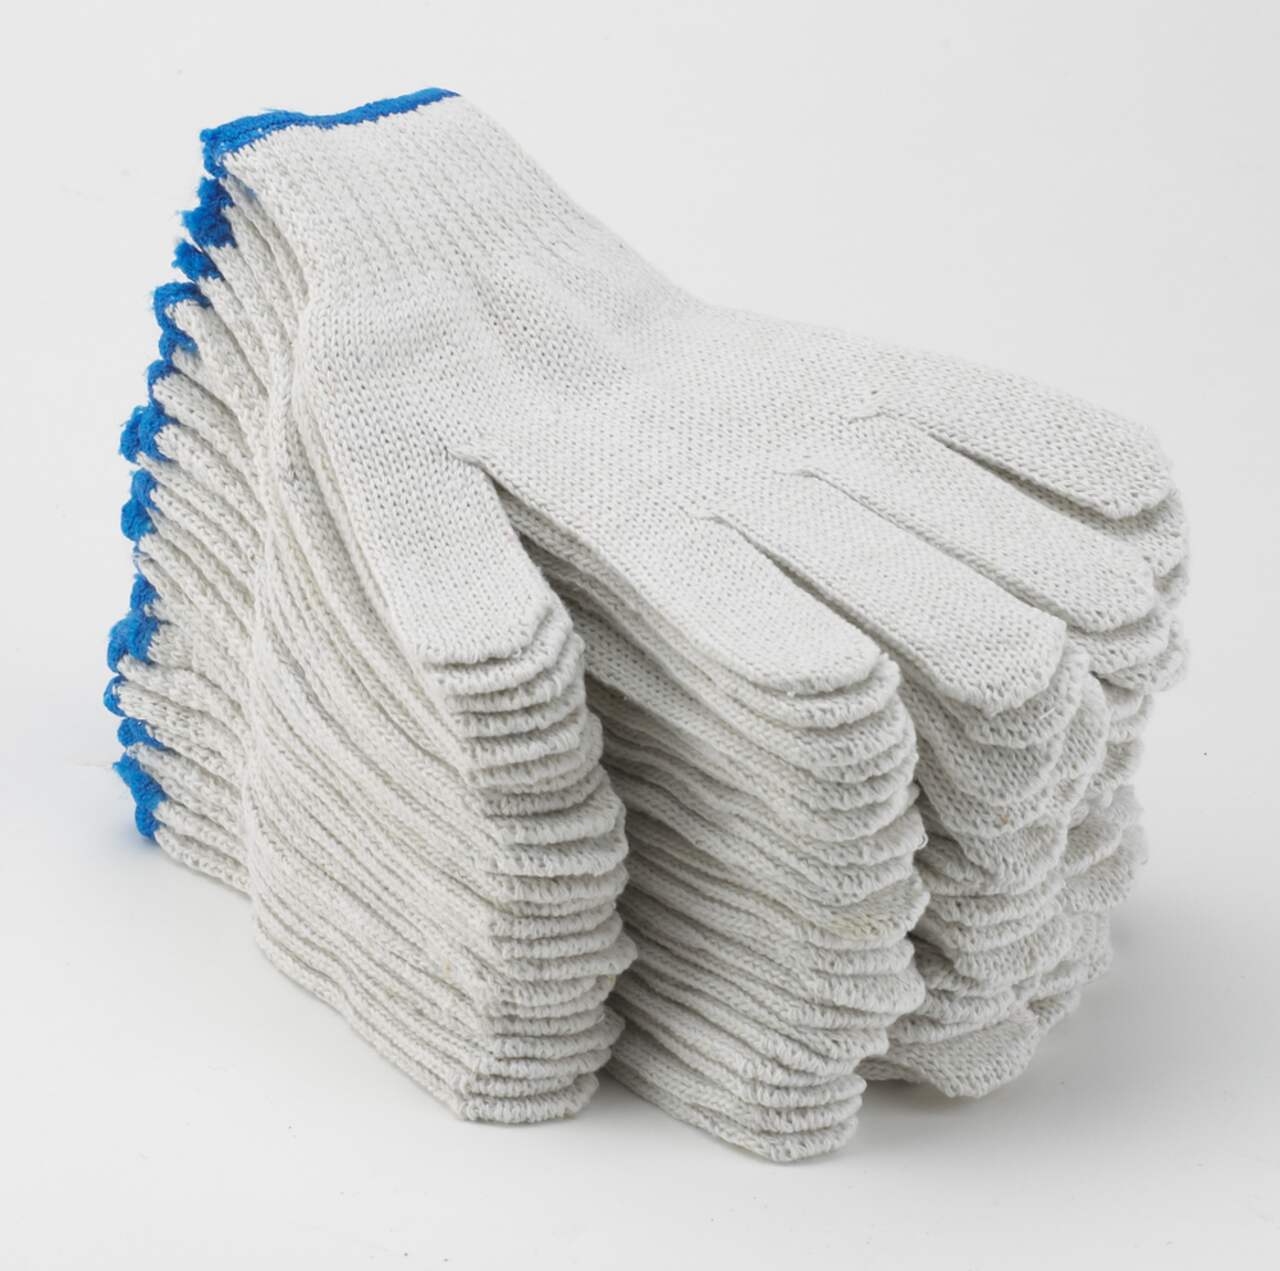 Sous-gants en tricot